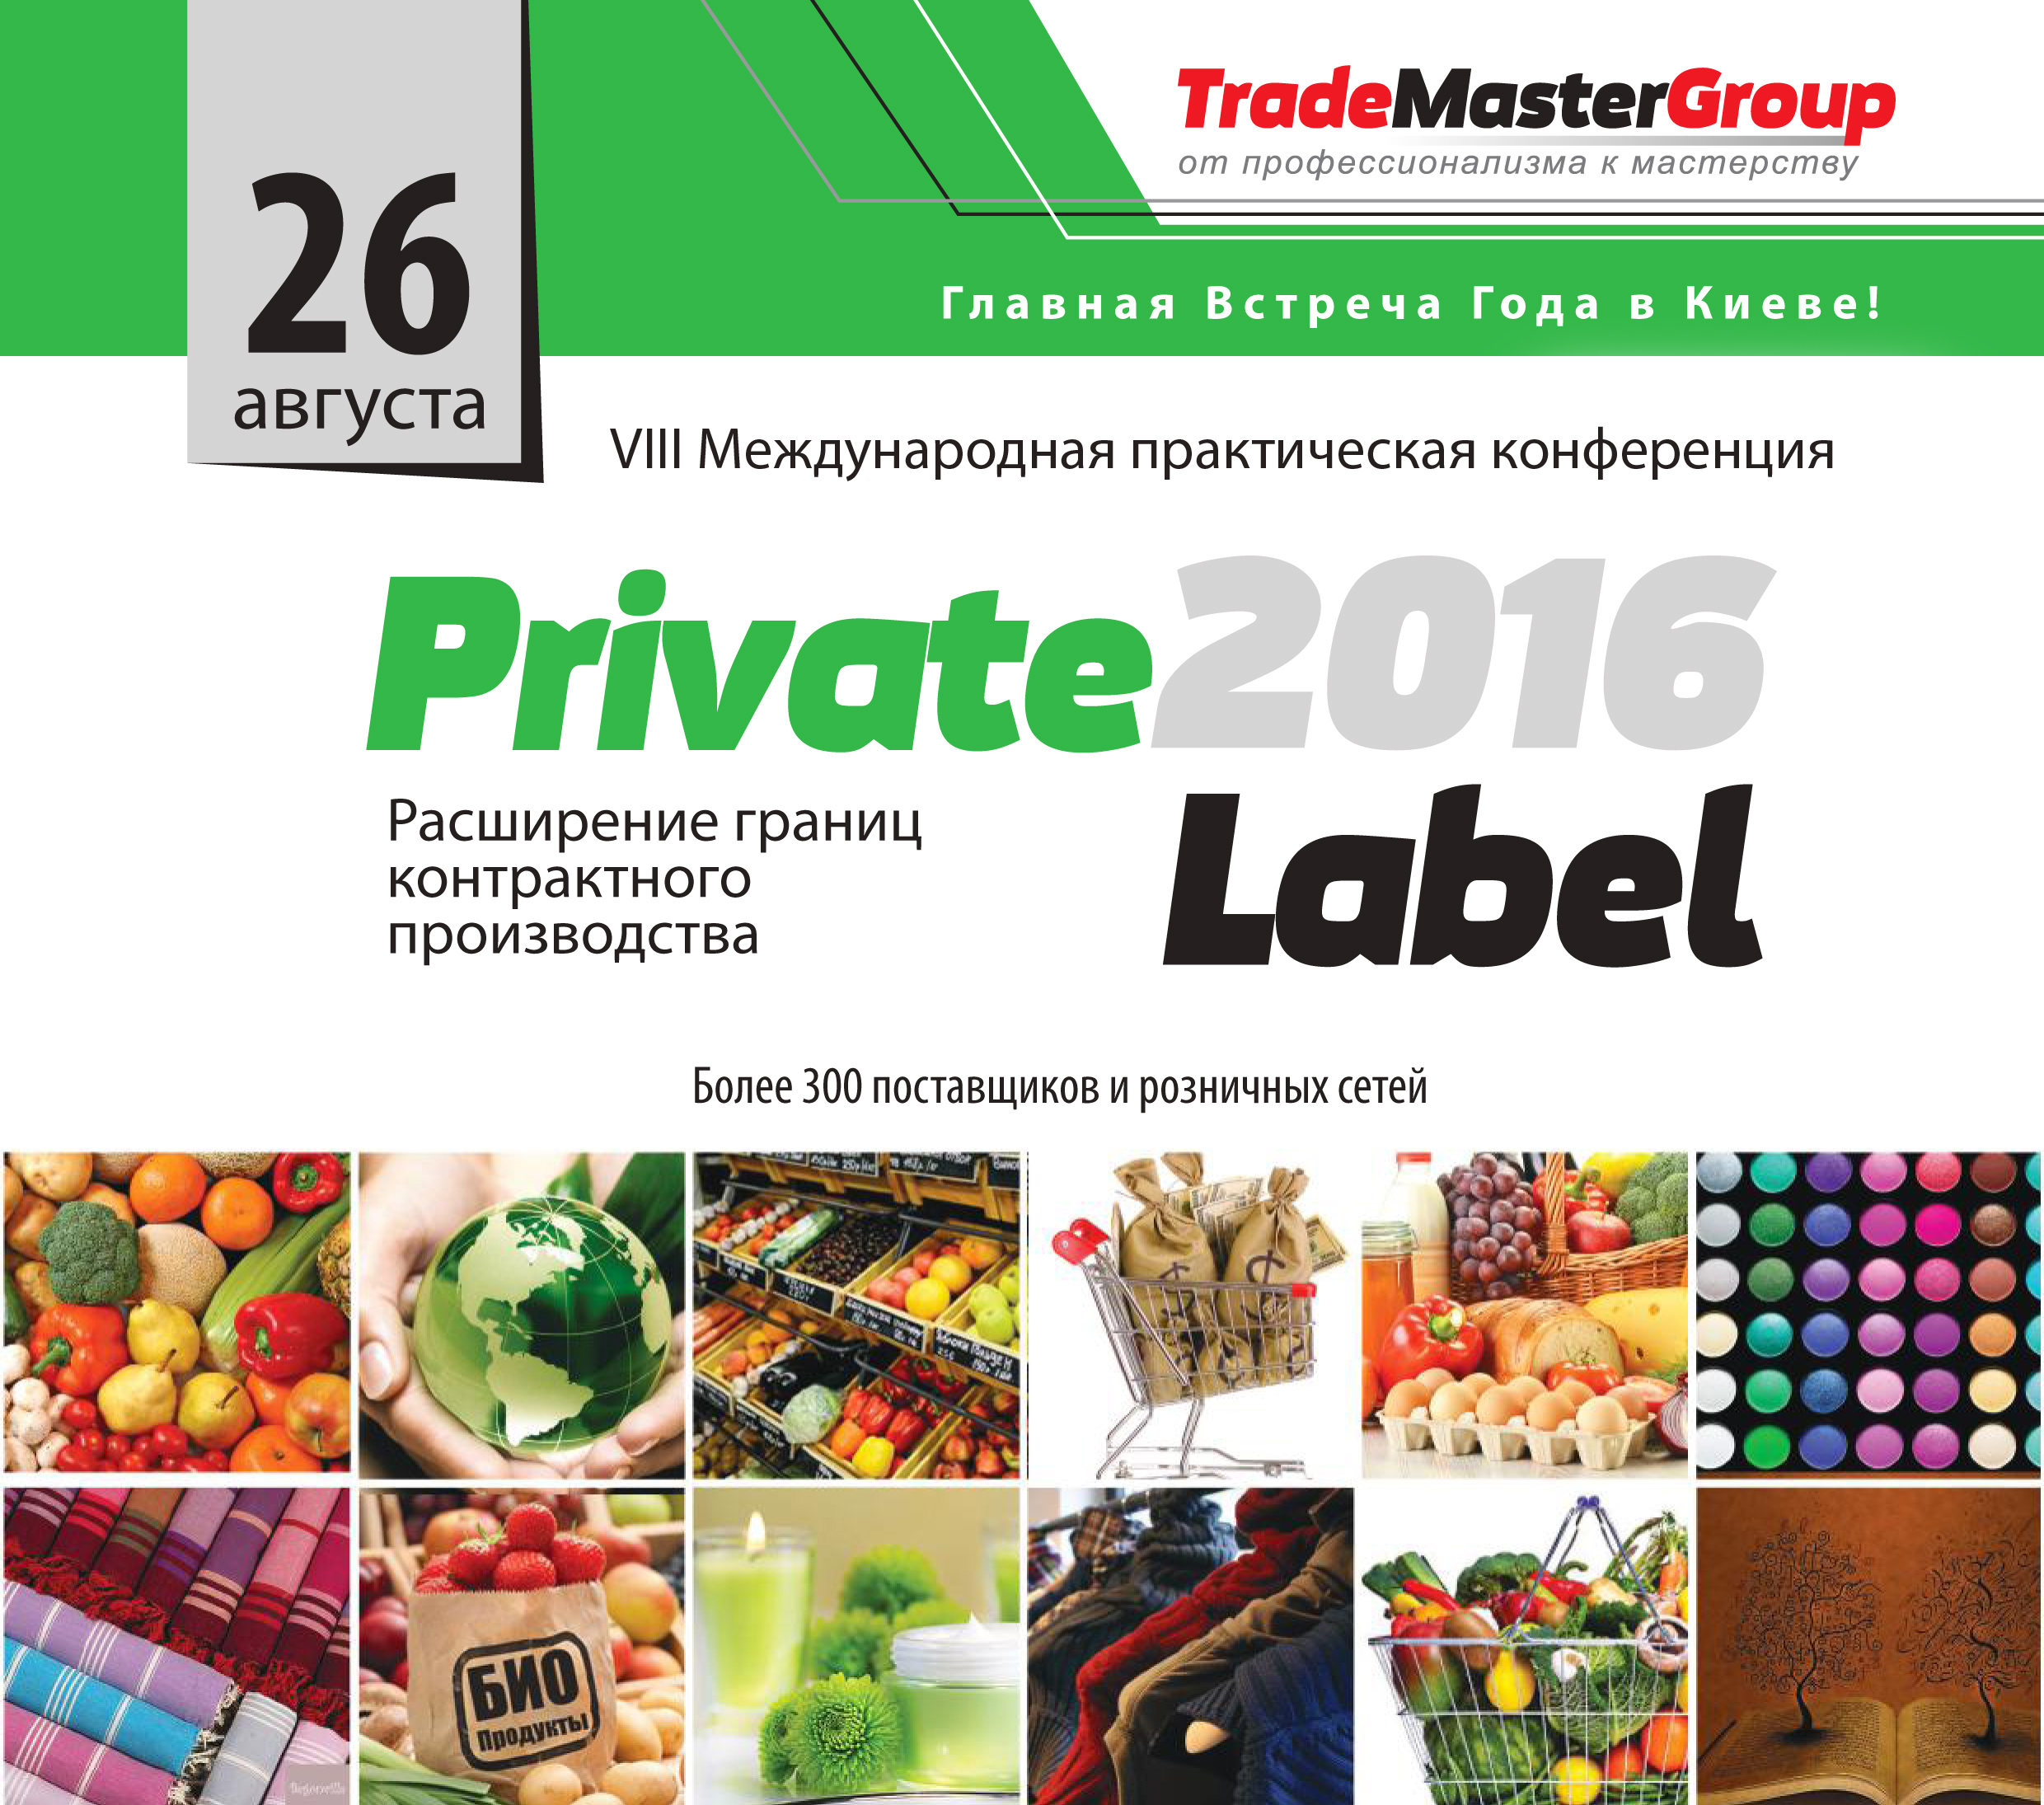 PRIVATE LABEL-2016: Расширение границ контрактного производства